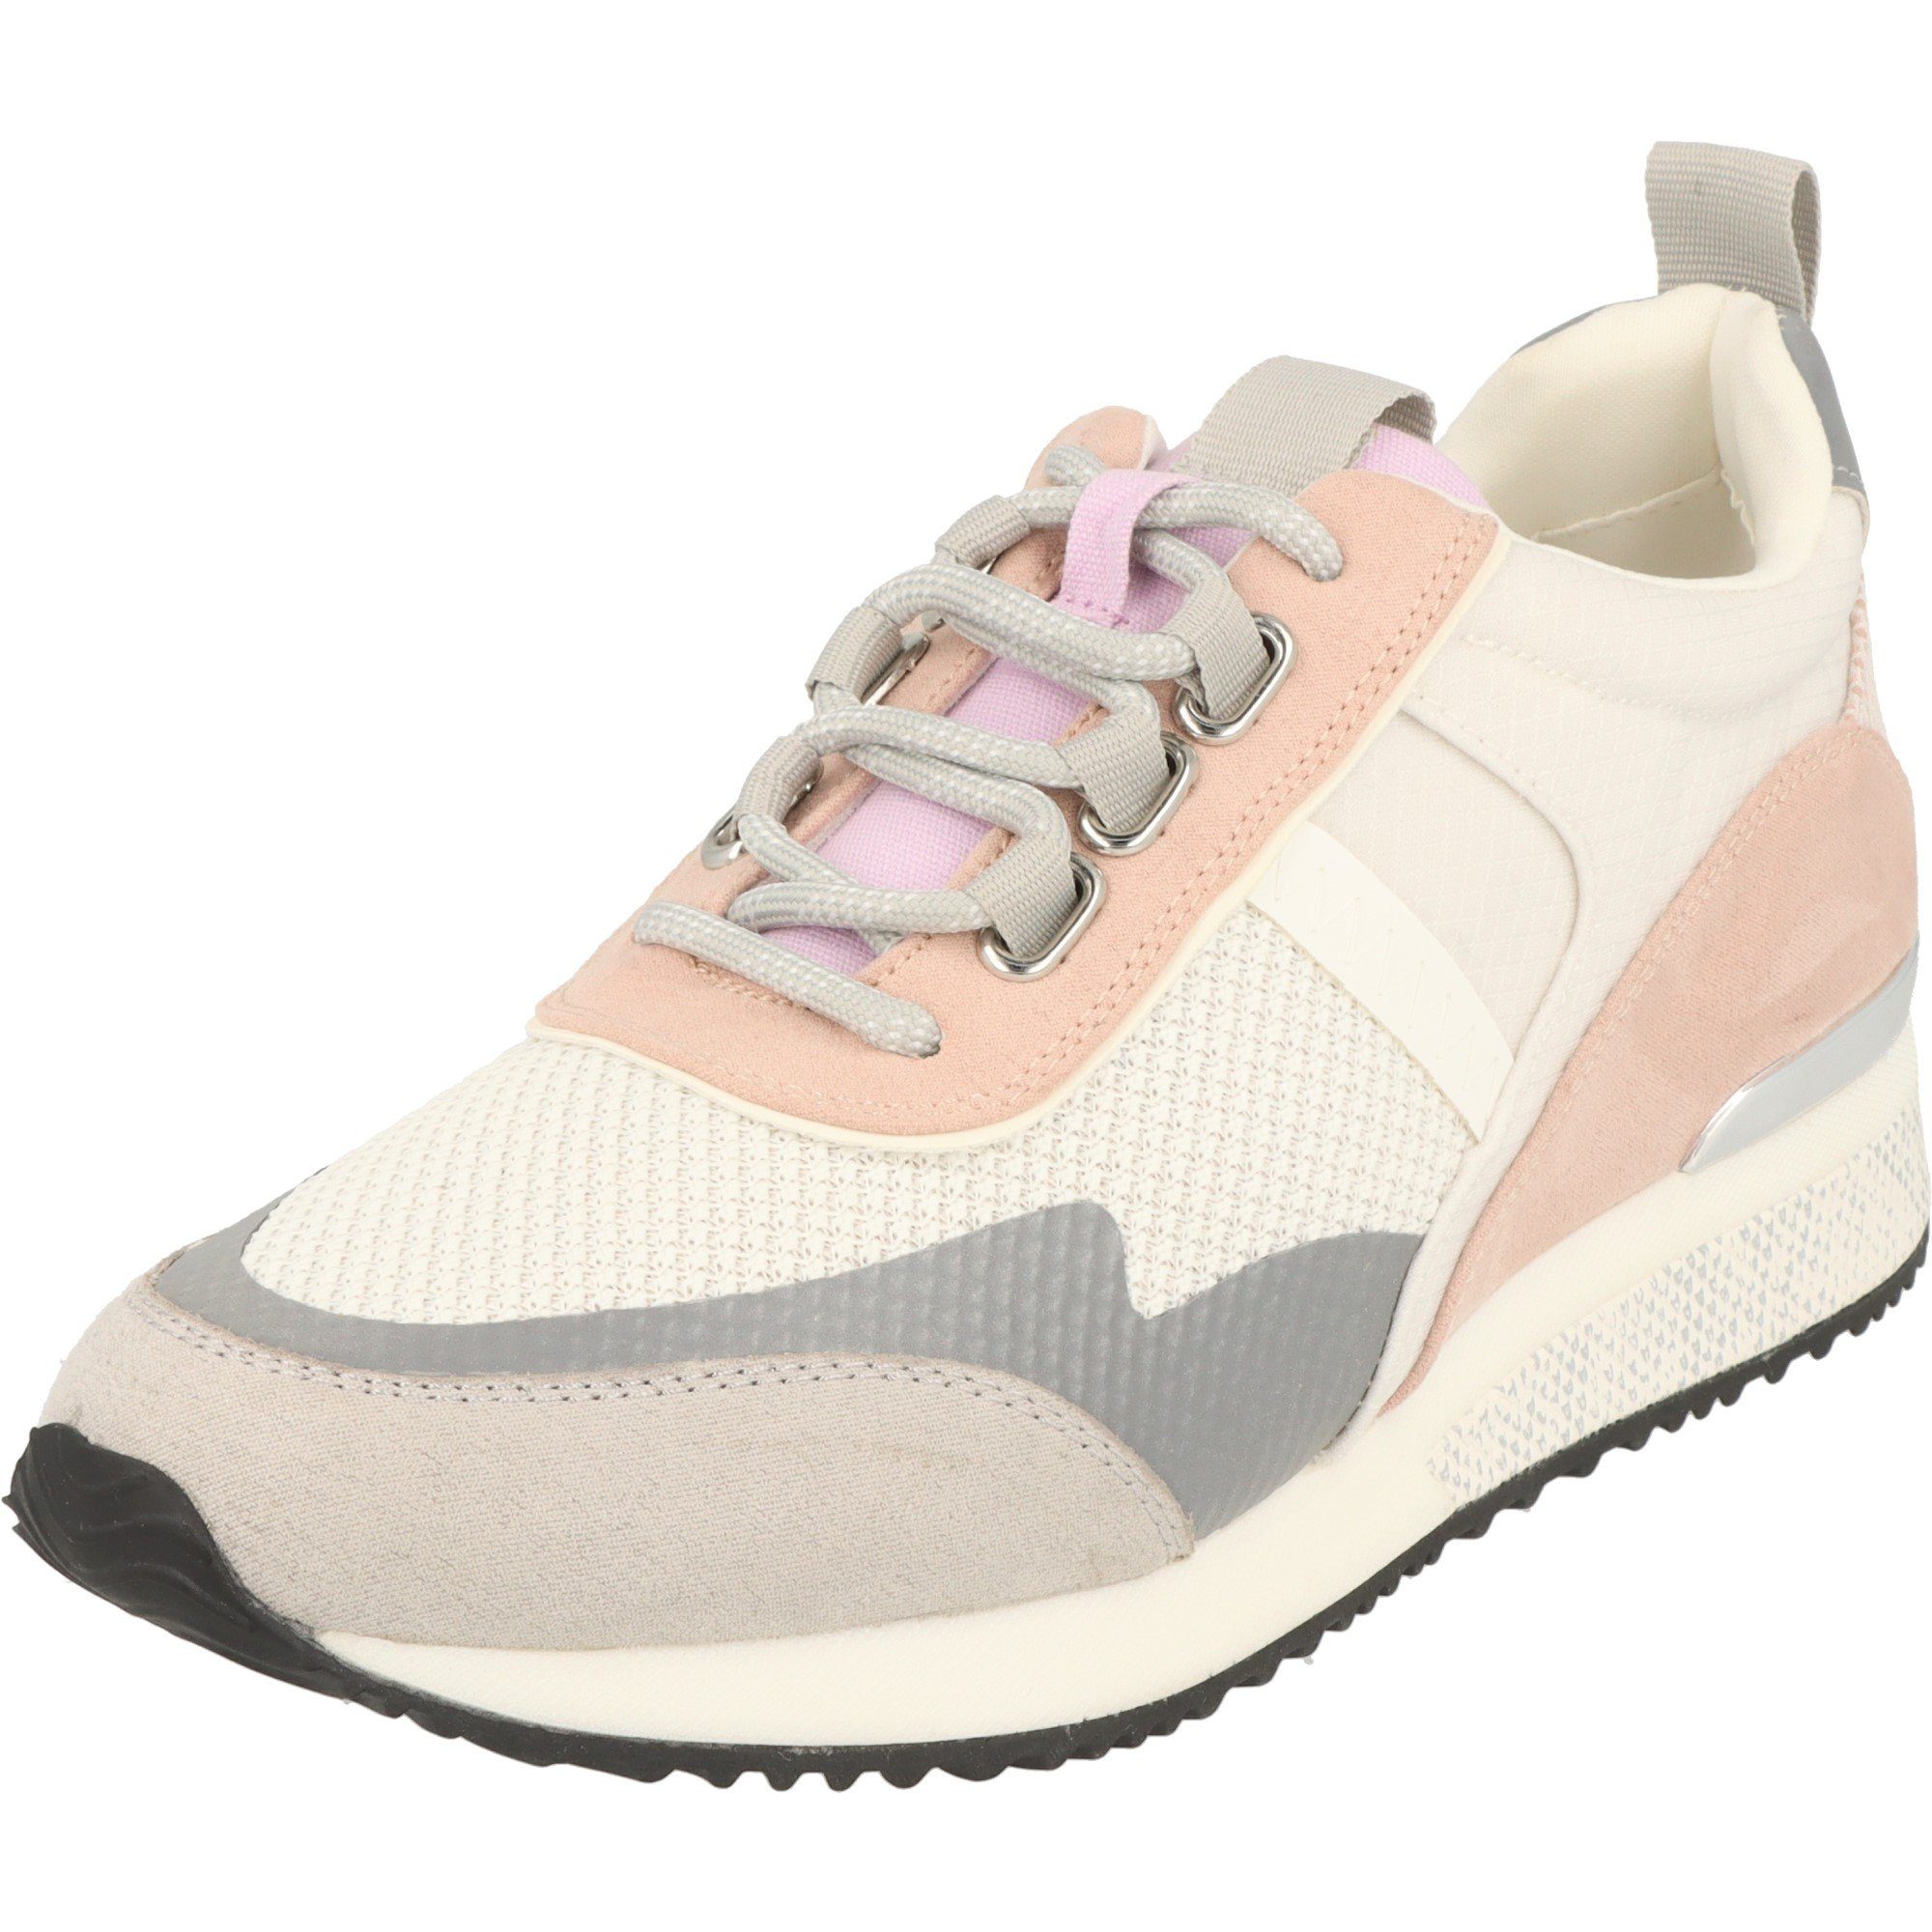 La Strada Damen Schuhe Halbschuhe 2003156-1002 Lt.Grey-Pink Multi Sneaker schwarz | 